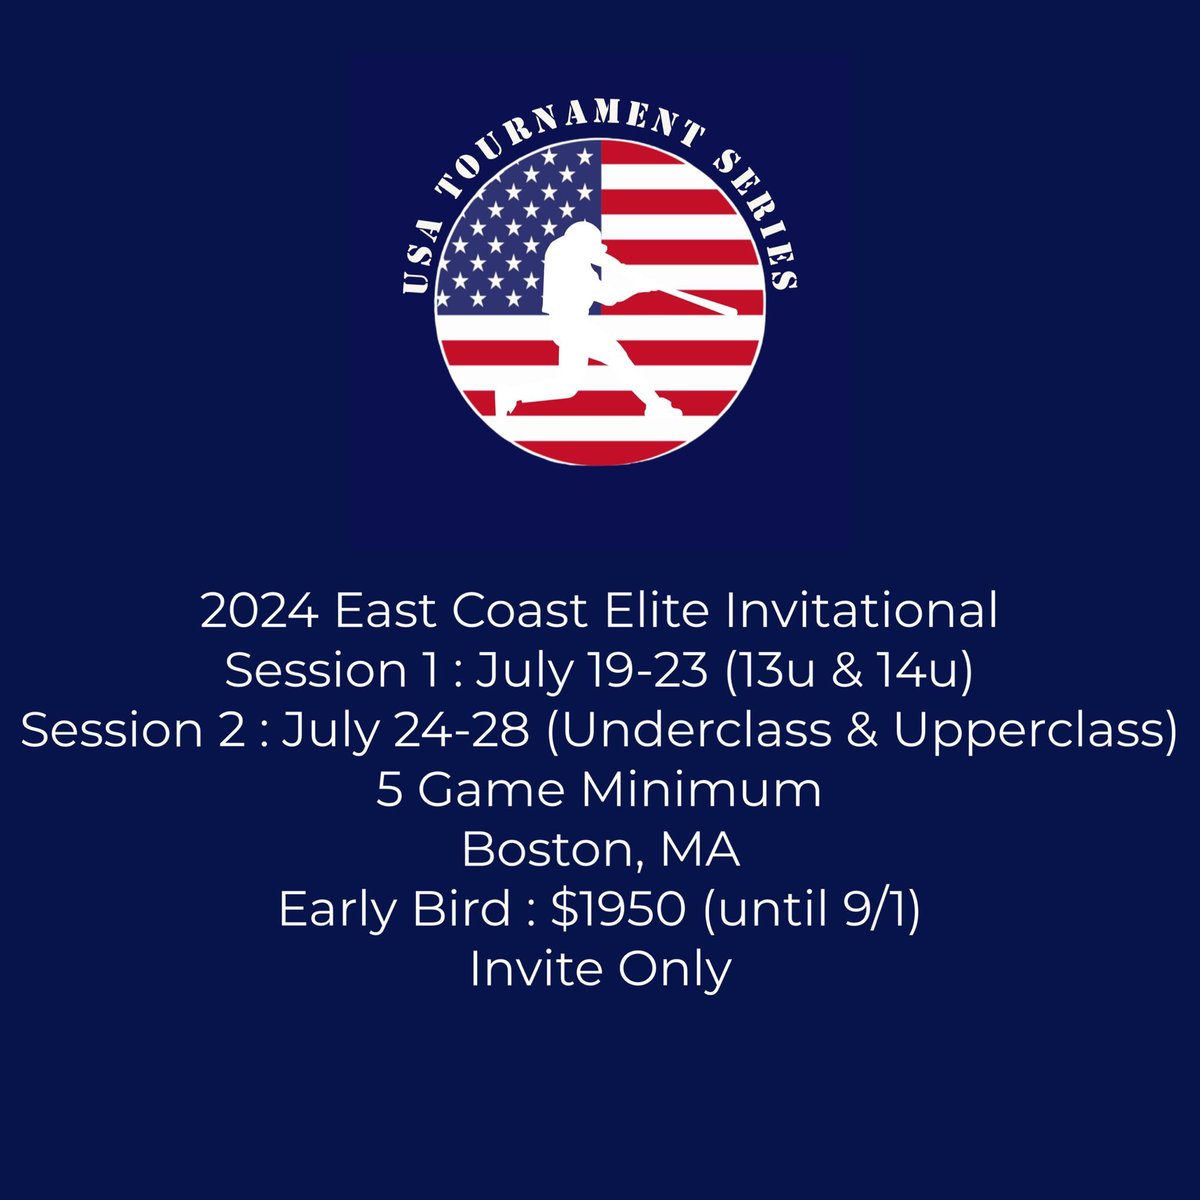 Just Announced: The 2024 East Coast Elite Invitational